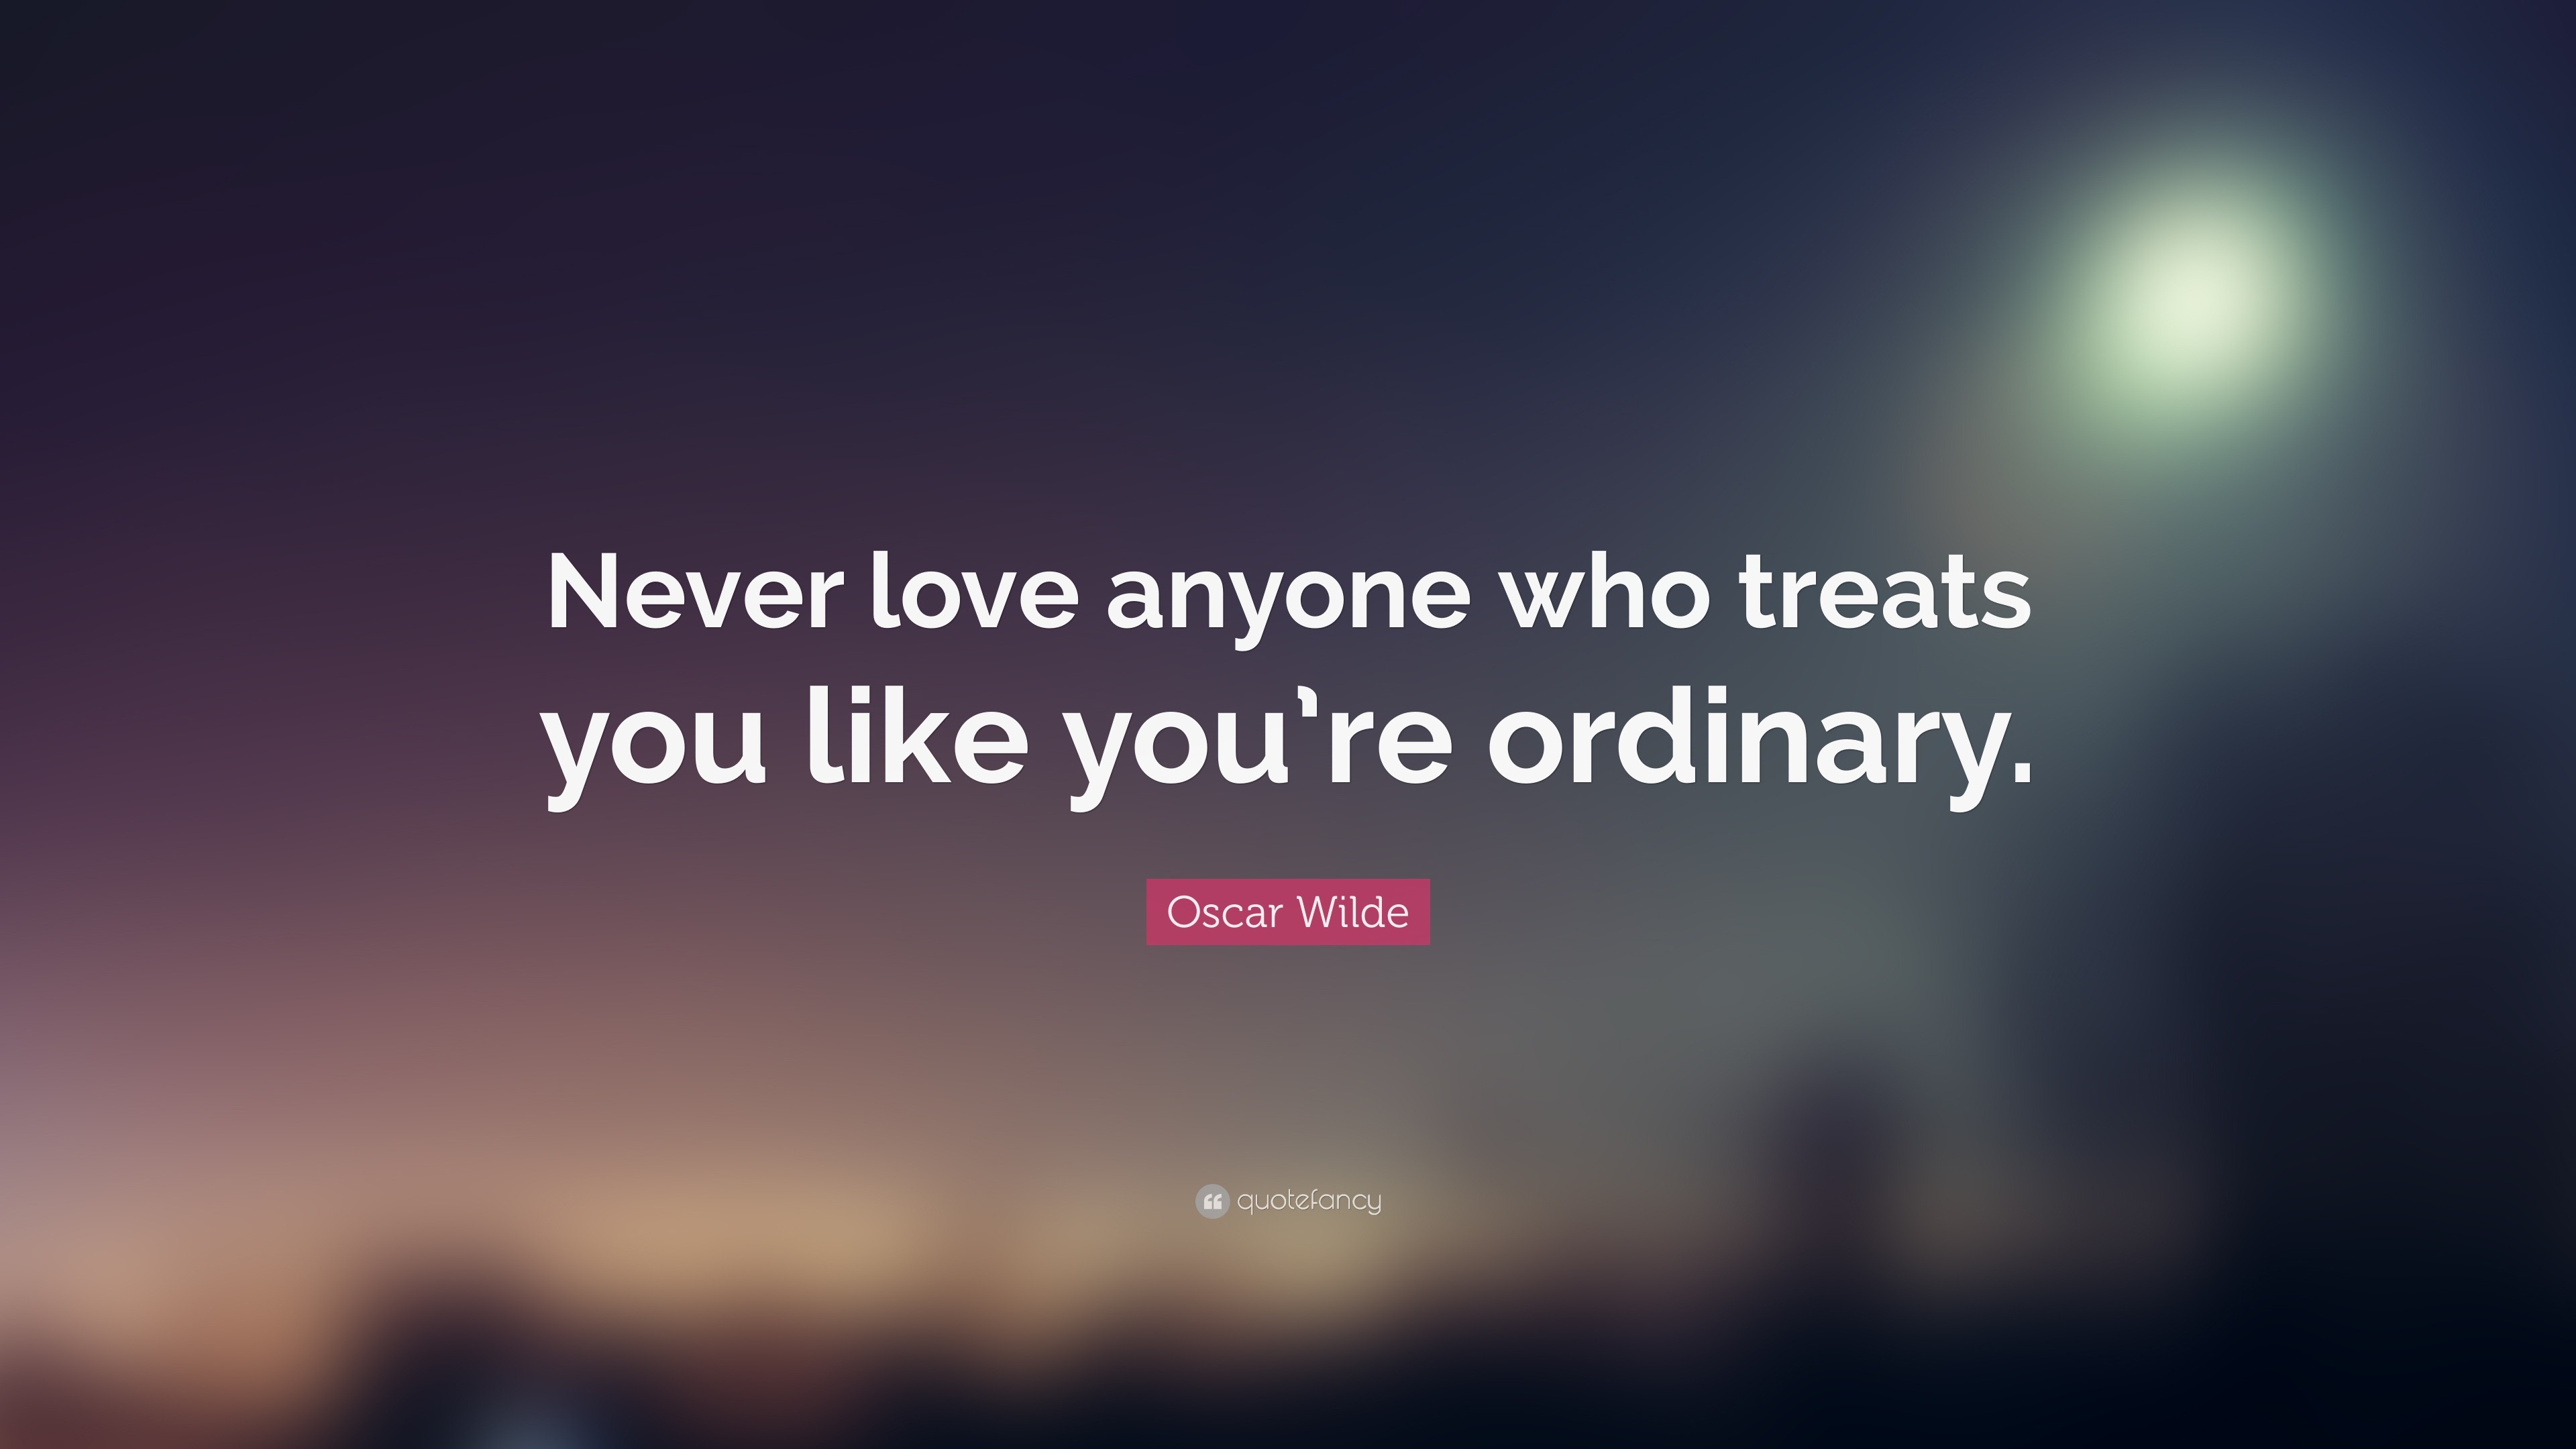 Oscar Wilde Quote “Never love anyone who treats you like you re ordinary